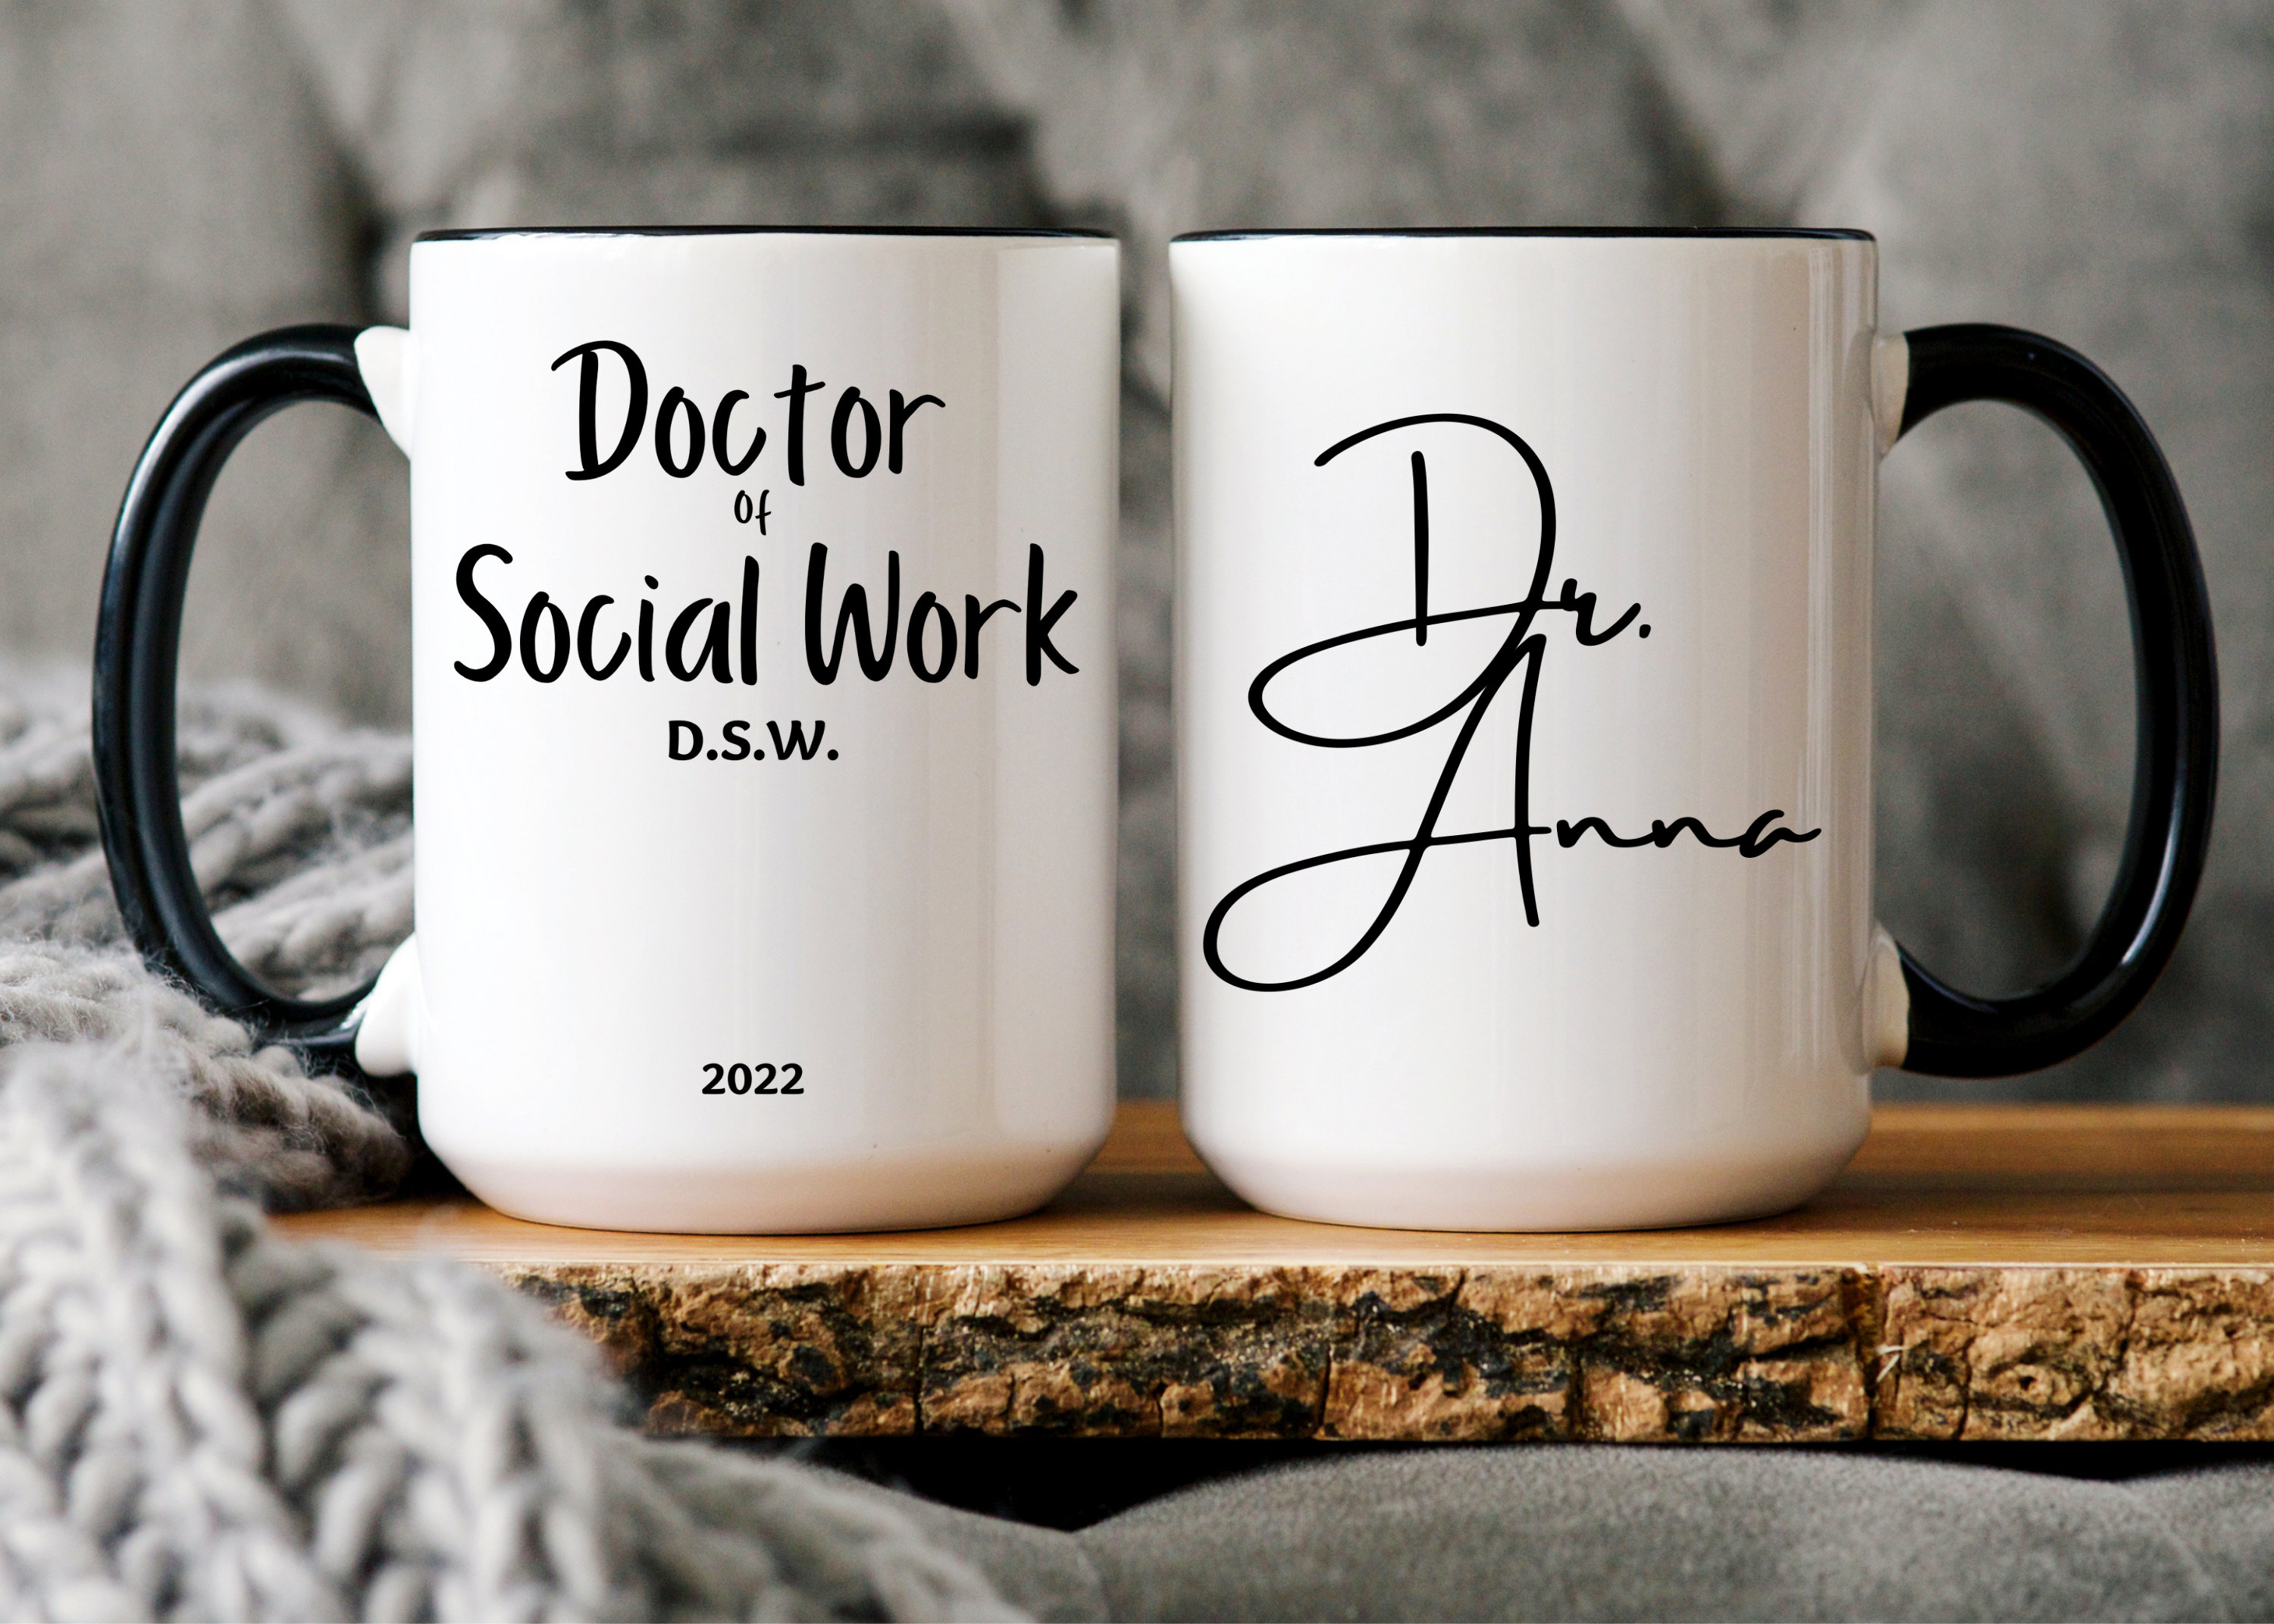 of Social Work Doctoral Degree in Social Work Dr Graduation Gift for Social Worker Dr Mug for Social Worker